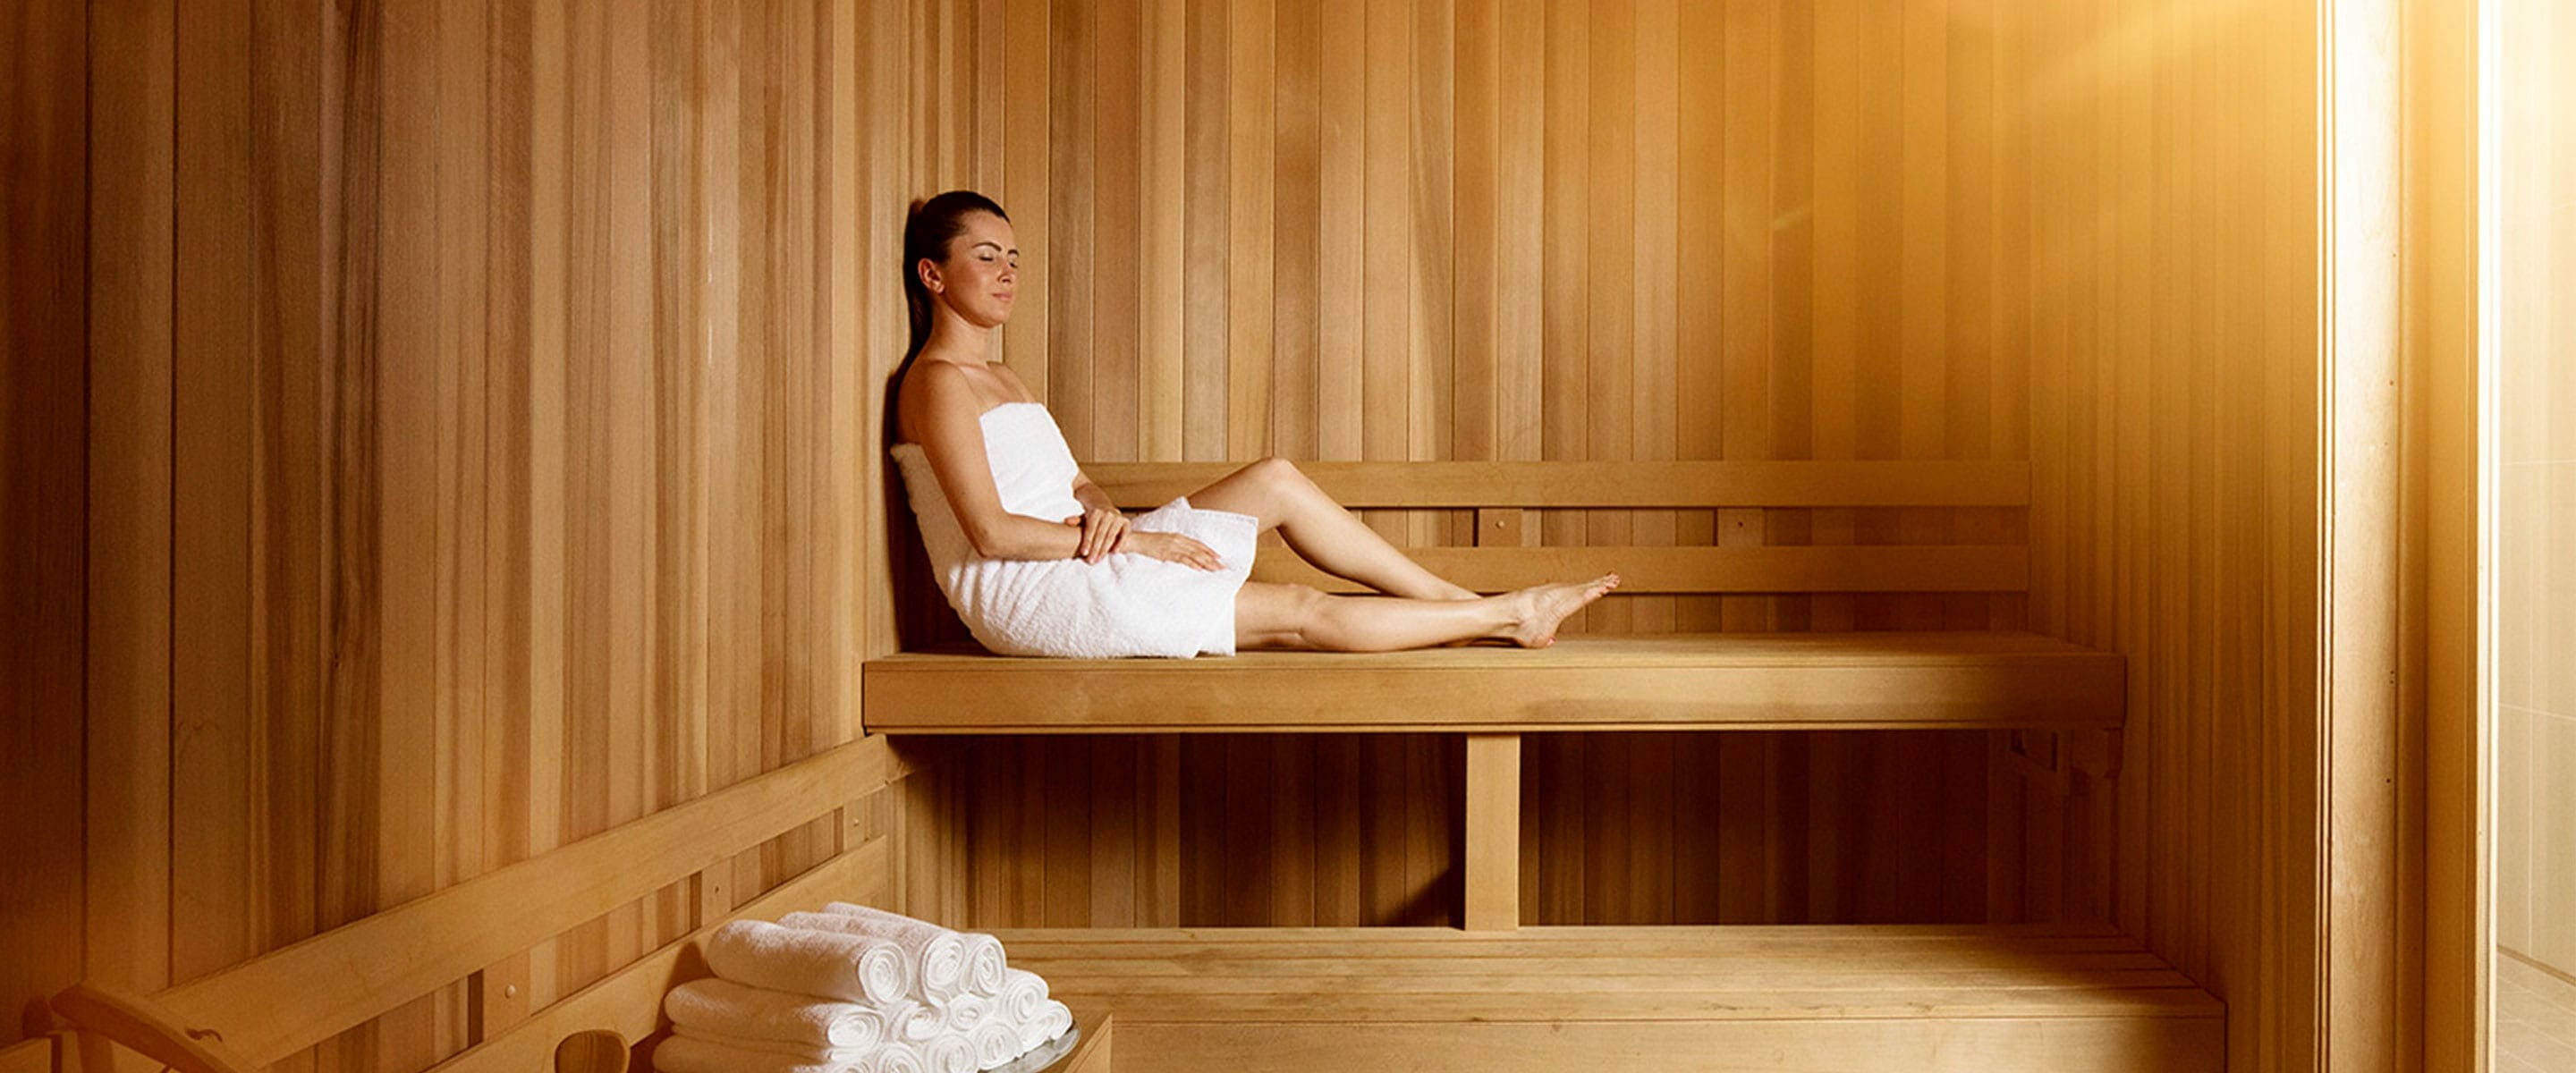 Woman relaxing in AquaVie Spa sauna